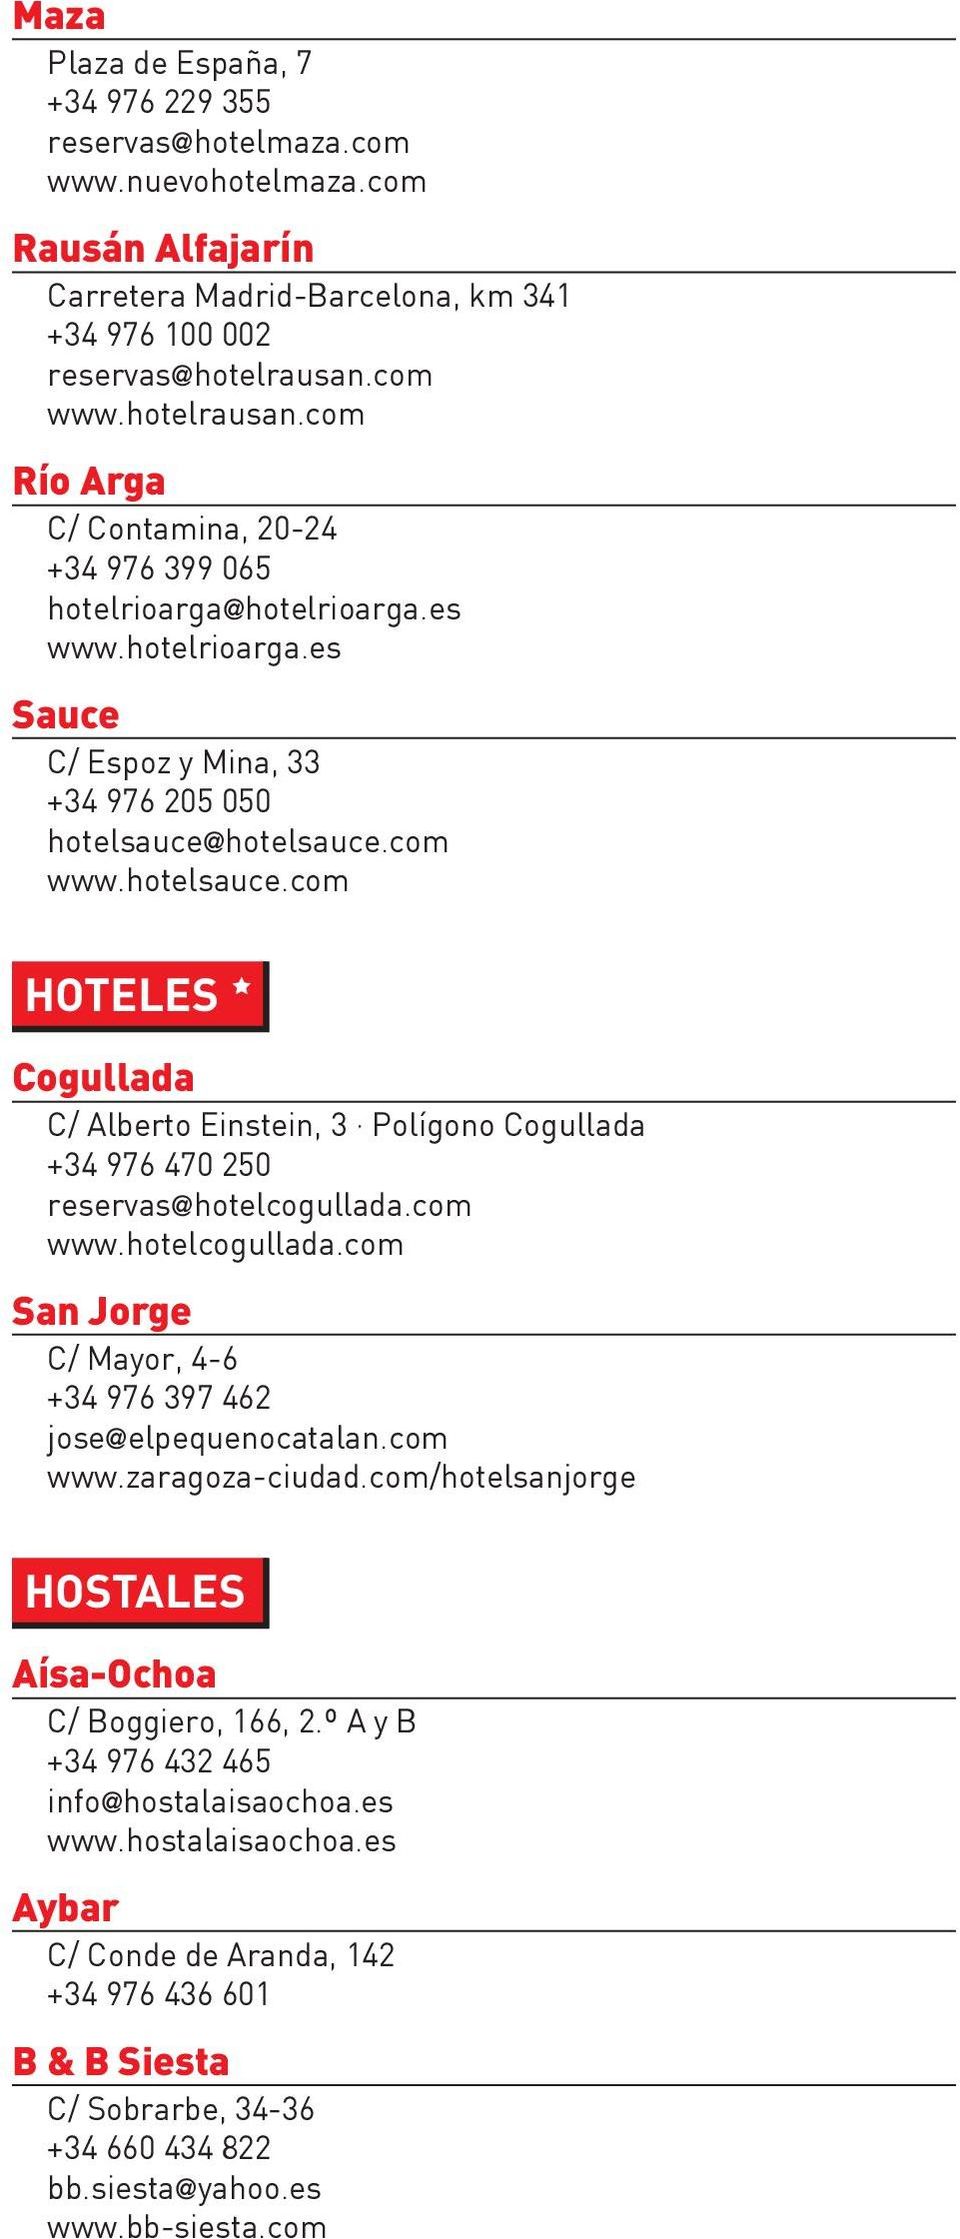 hotelsauce.com www.hotelsauce.com HOTELES Cogullada C/ Alberto Einstein, 3 Polígono Cogullada +34 976 470 250 reservas@hotelcogullada.com www.hotelcogullada.com San Jorge C/ Mayor, 4-6 +34 976 397 462 jose@elpequenocatalan.